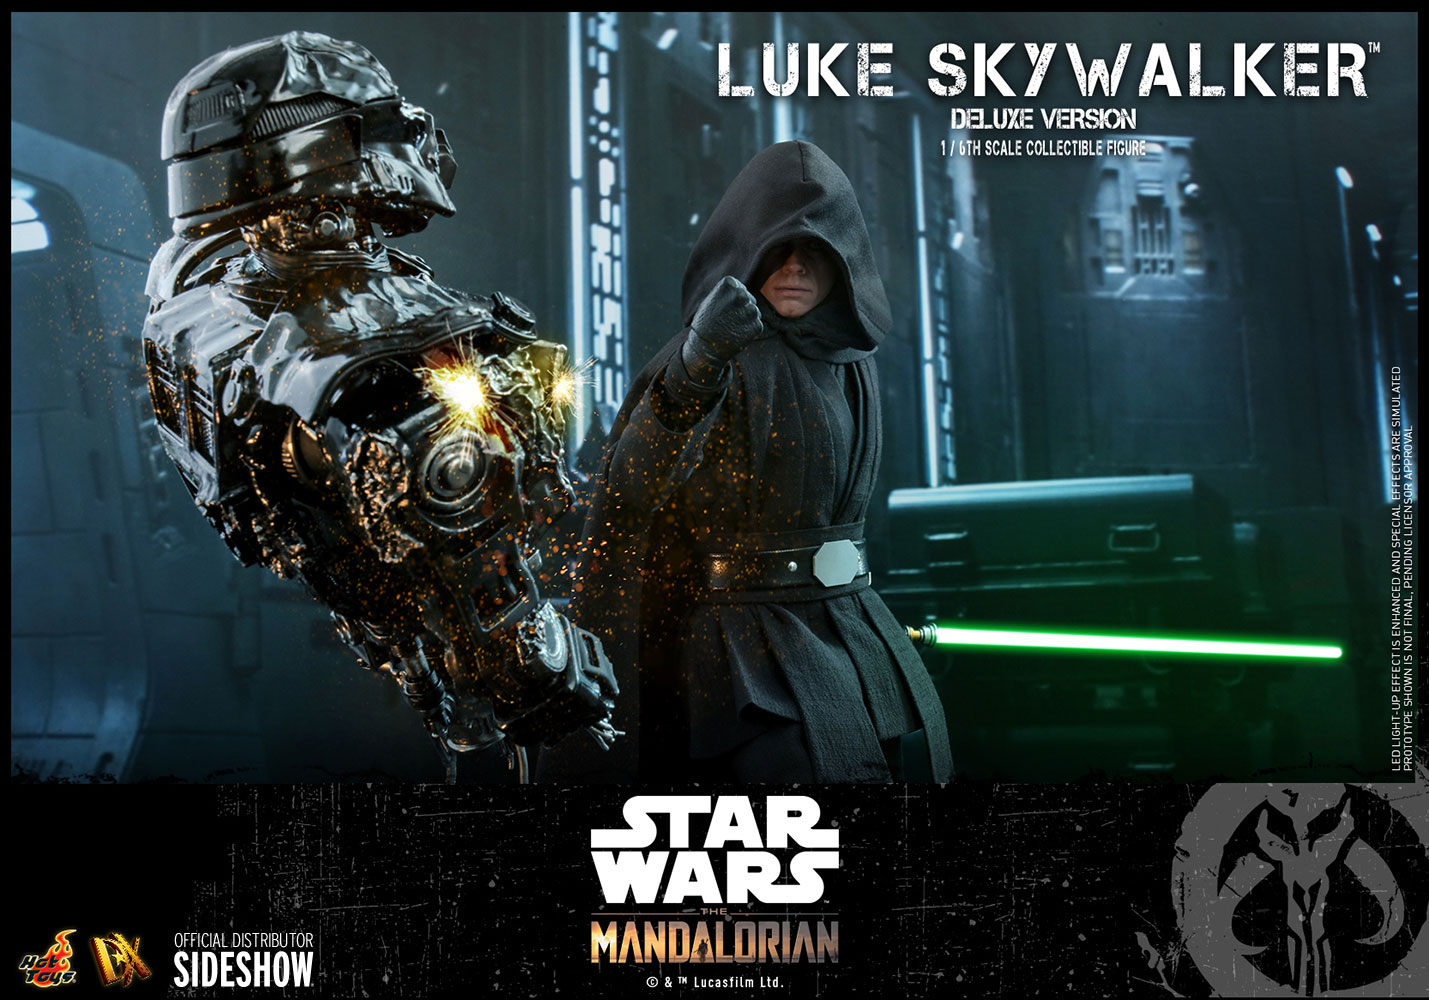 Luke Skywalker (Deluxe Version) (Special Edition)